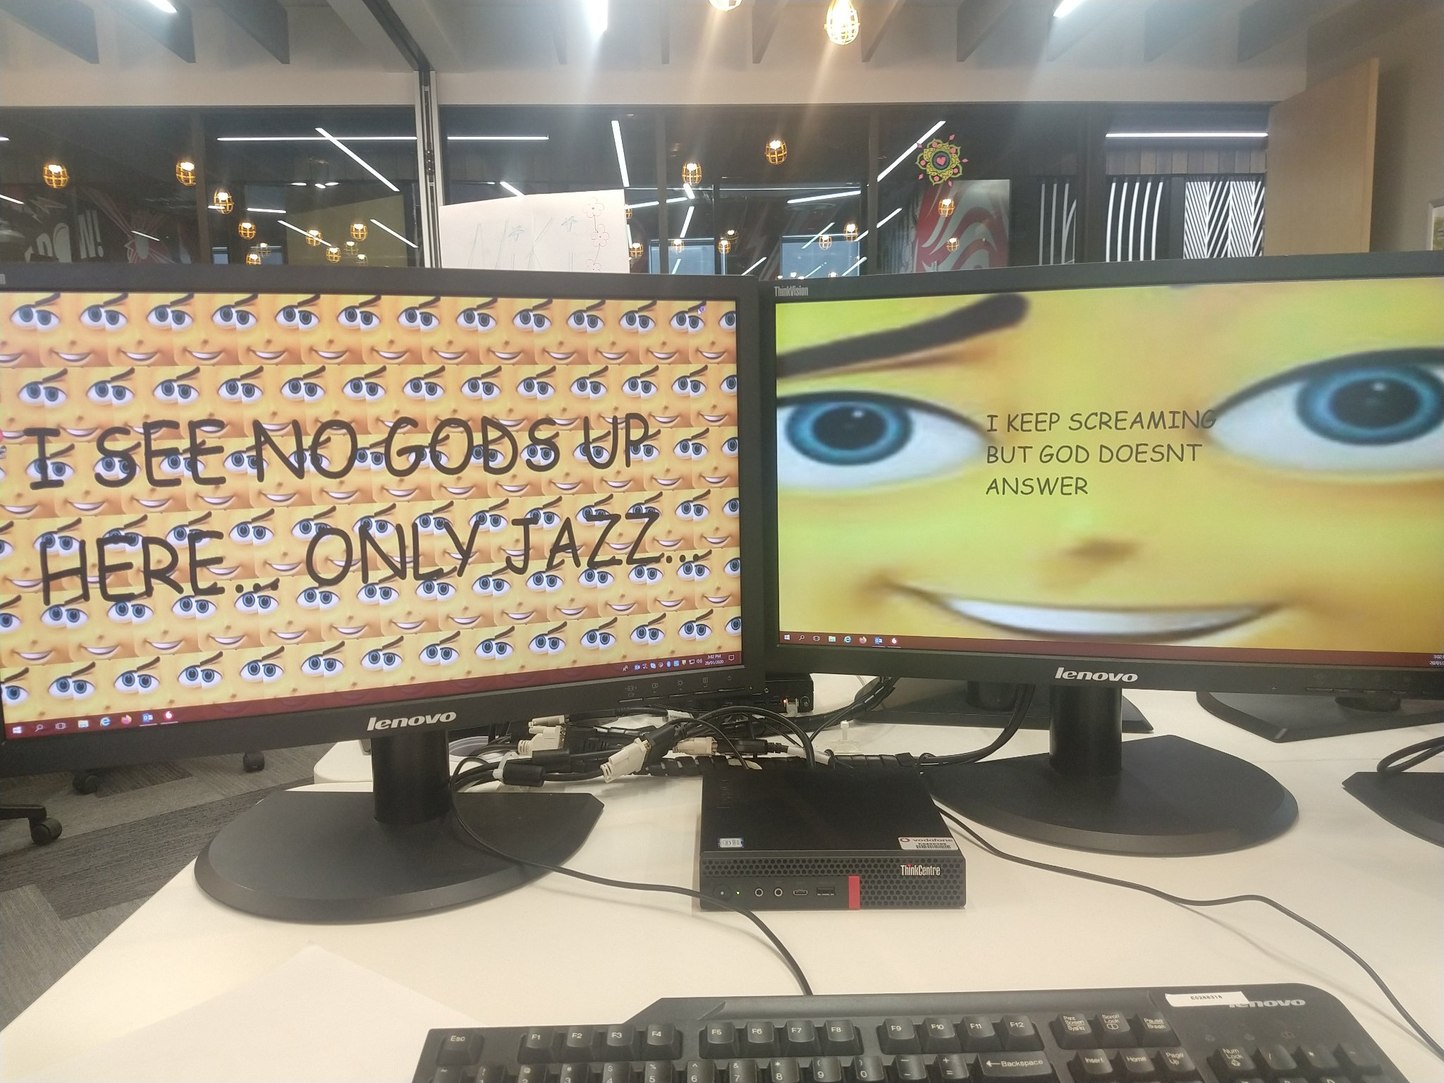 My desk at work haha - meme